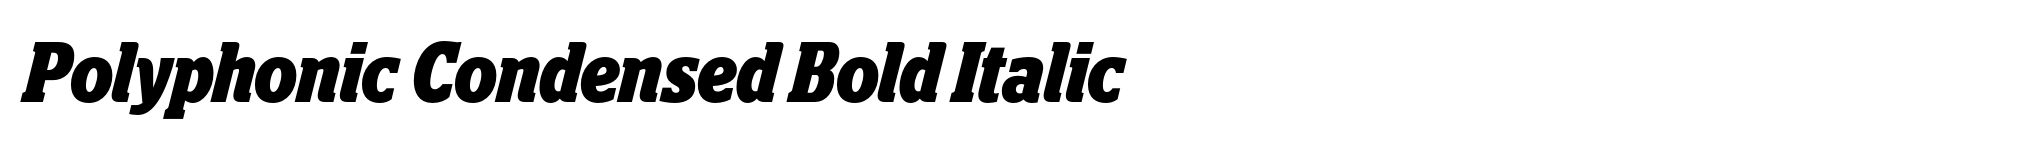 Polyphonic Condensed Bold Italic image